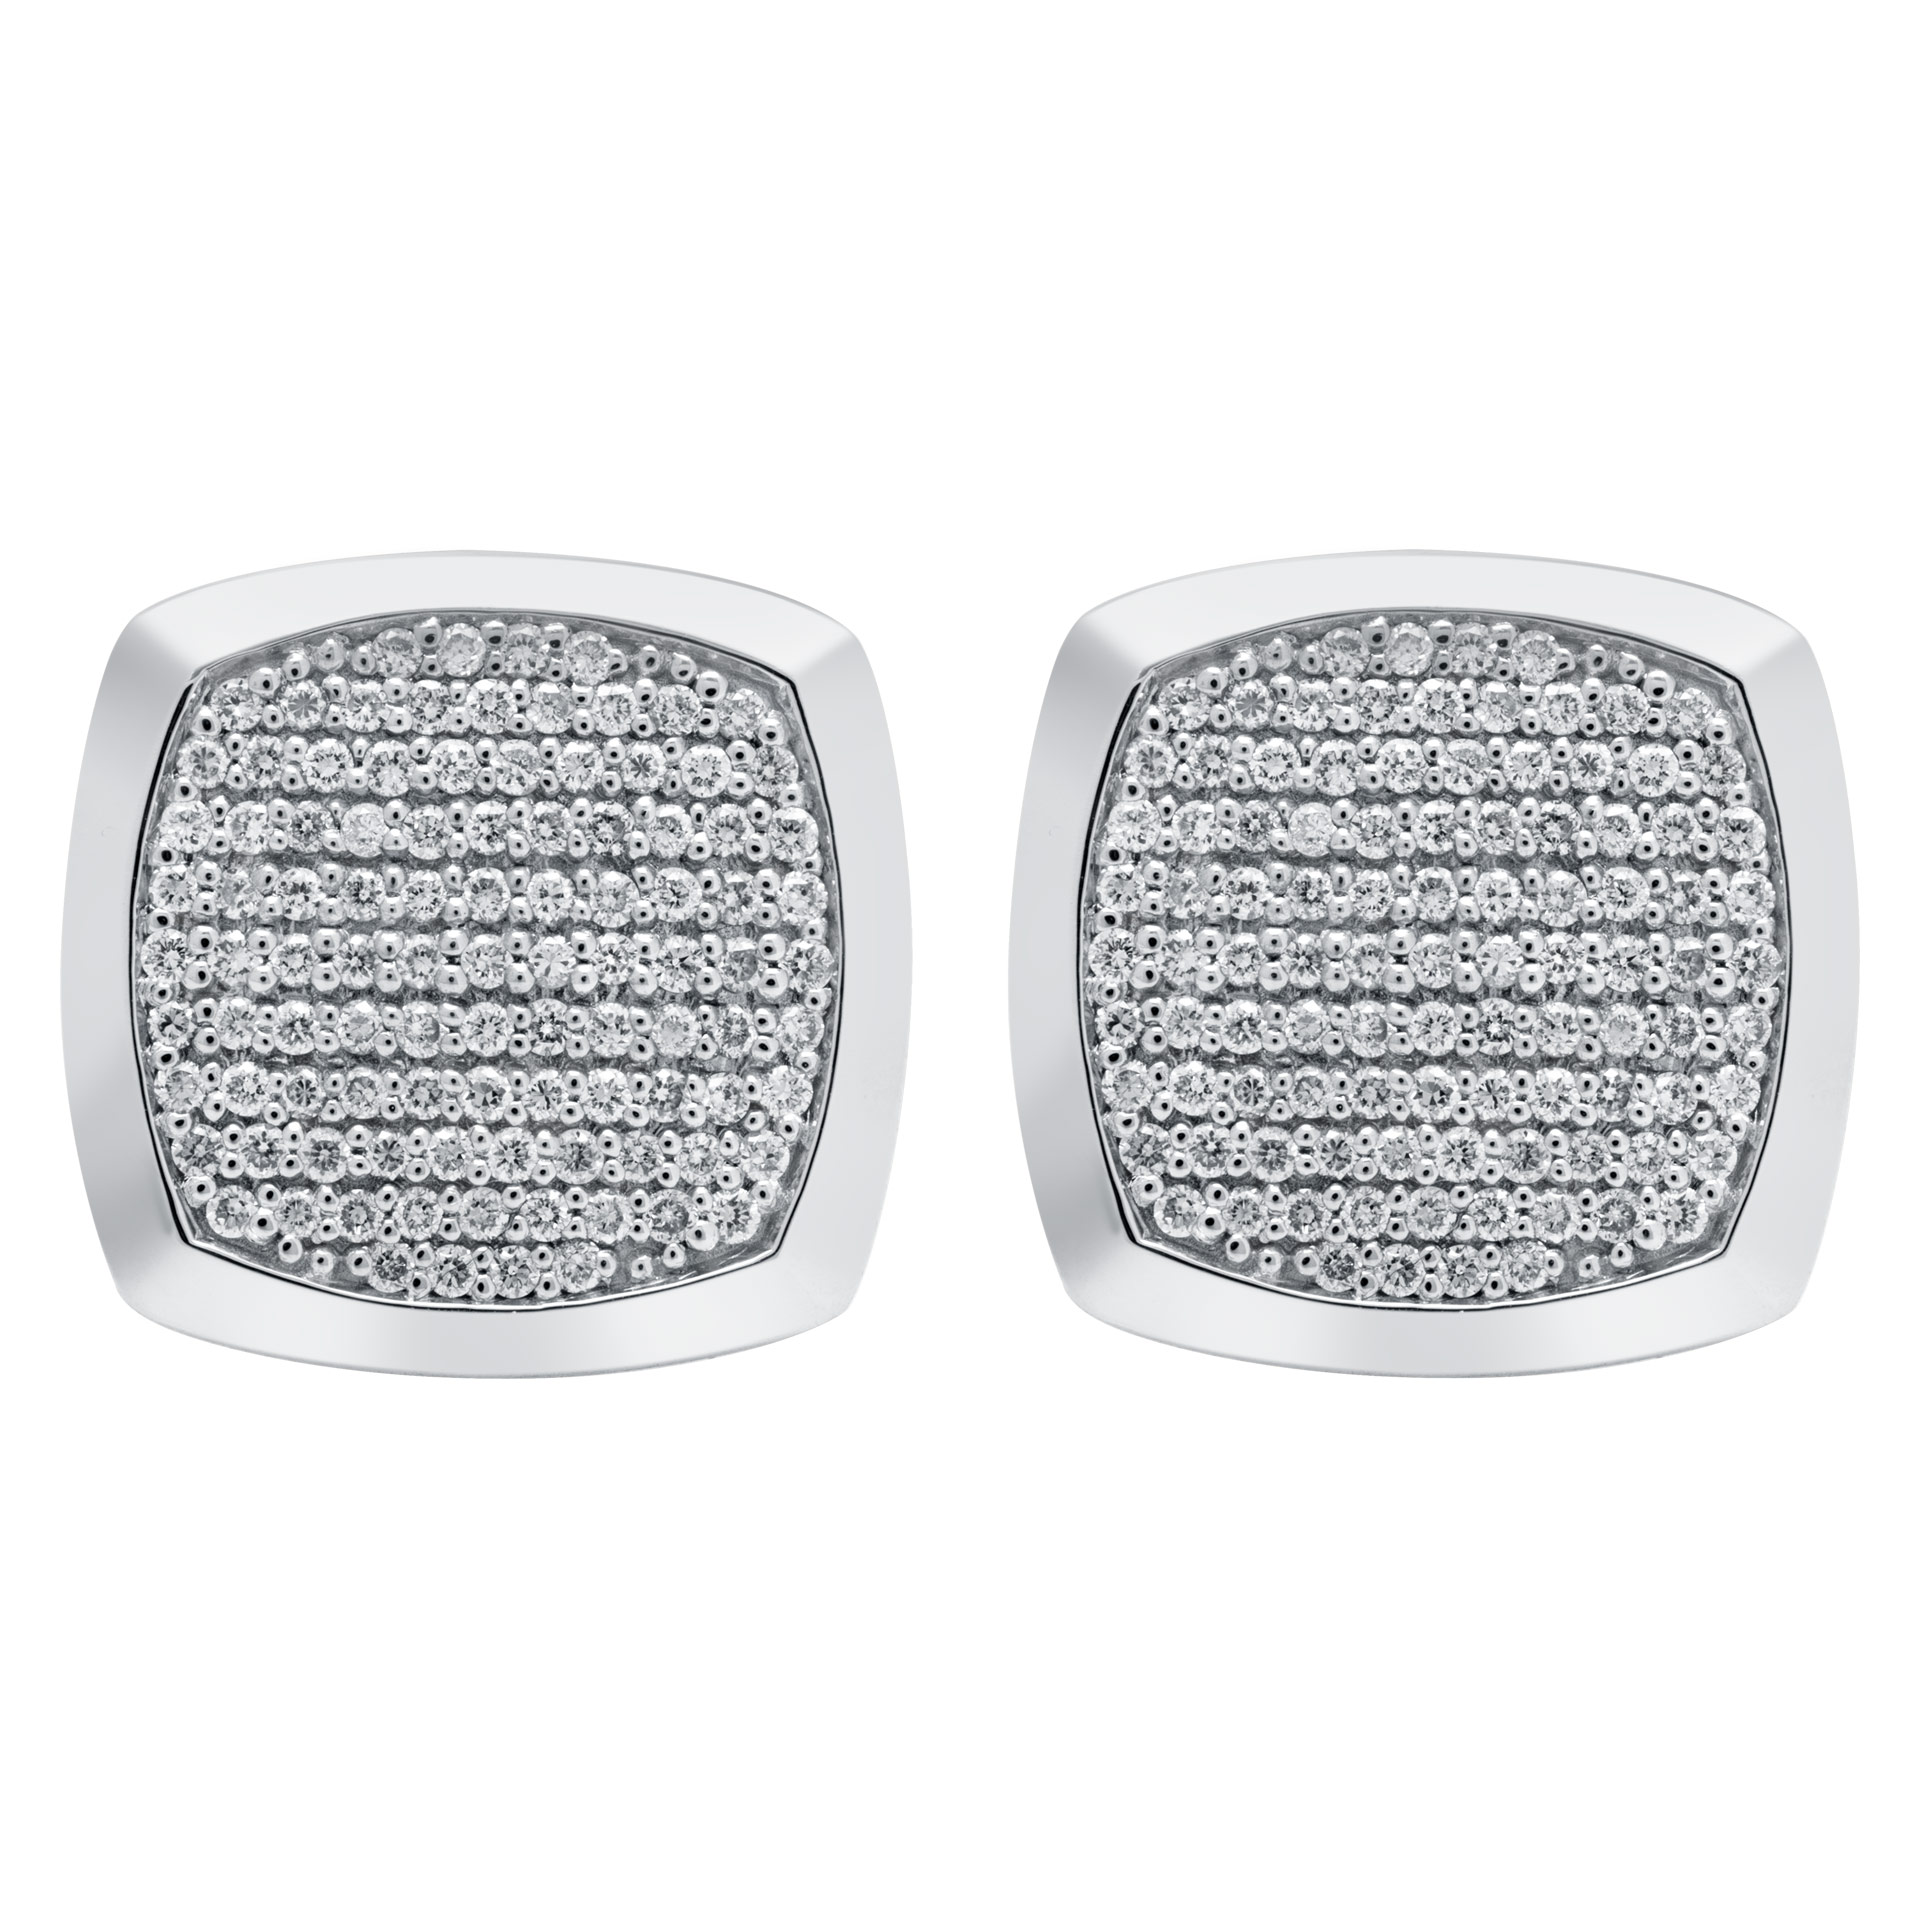 Diamond cufflinks in 18k white gold. 1.48 carats in clean white diamonds image 1